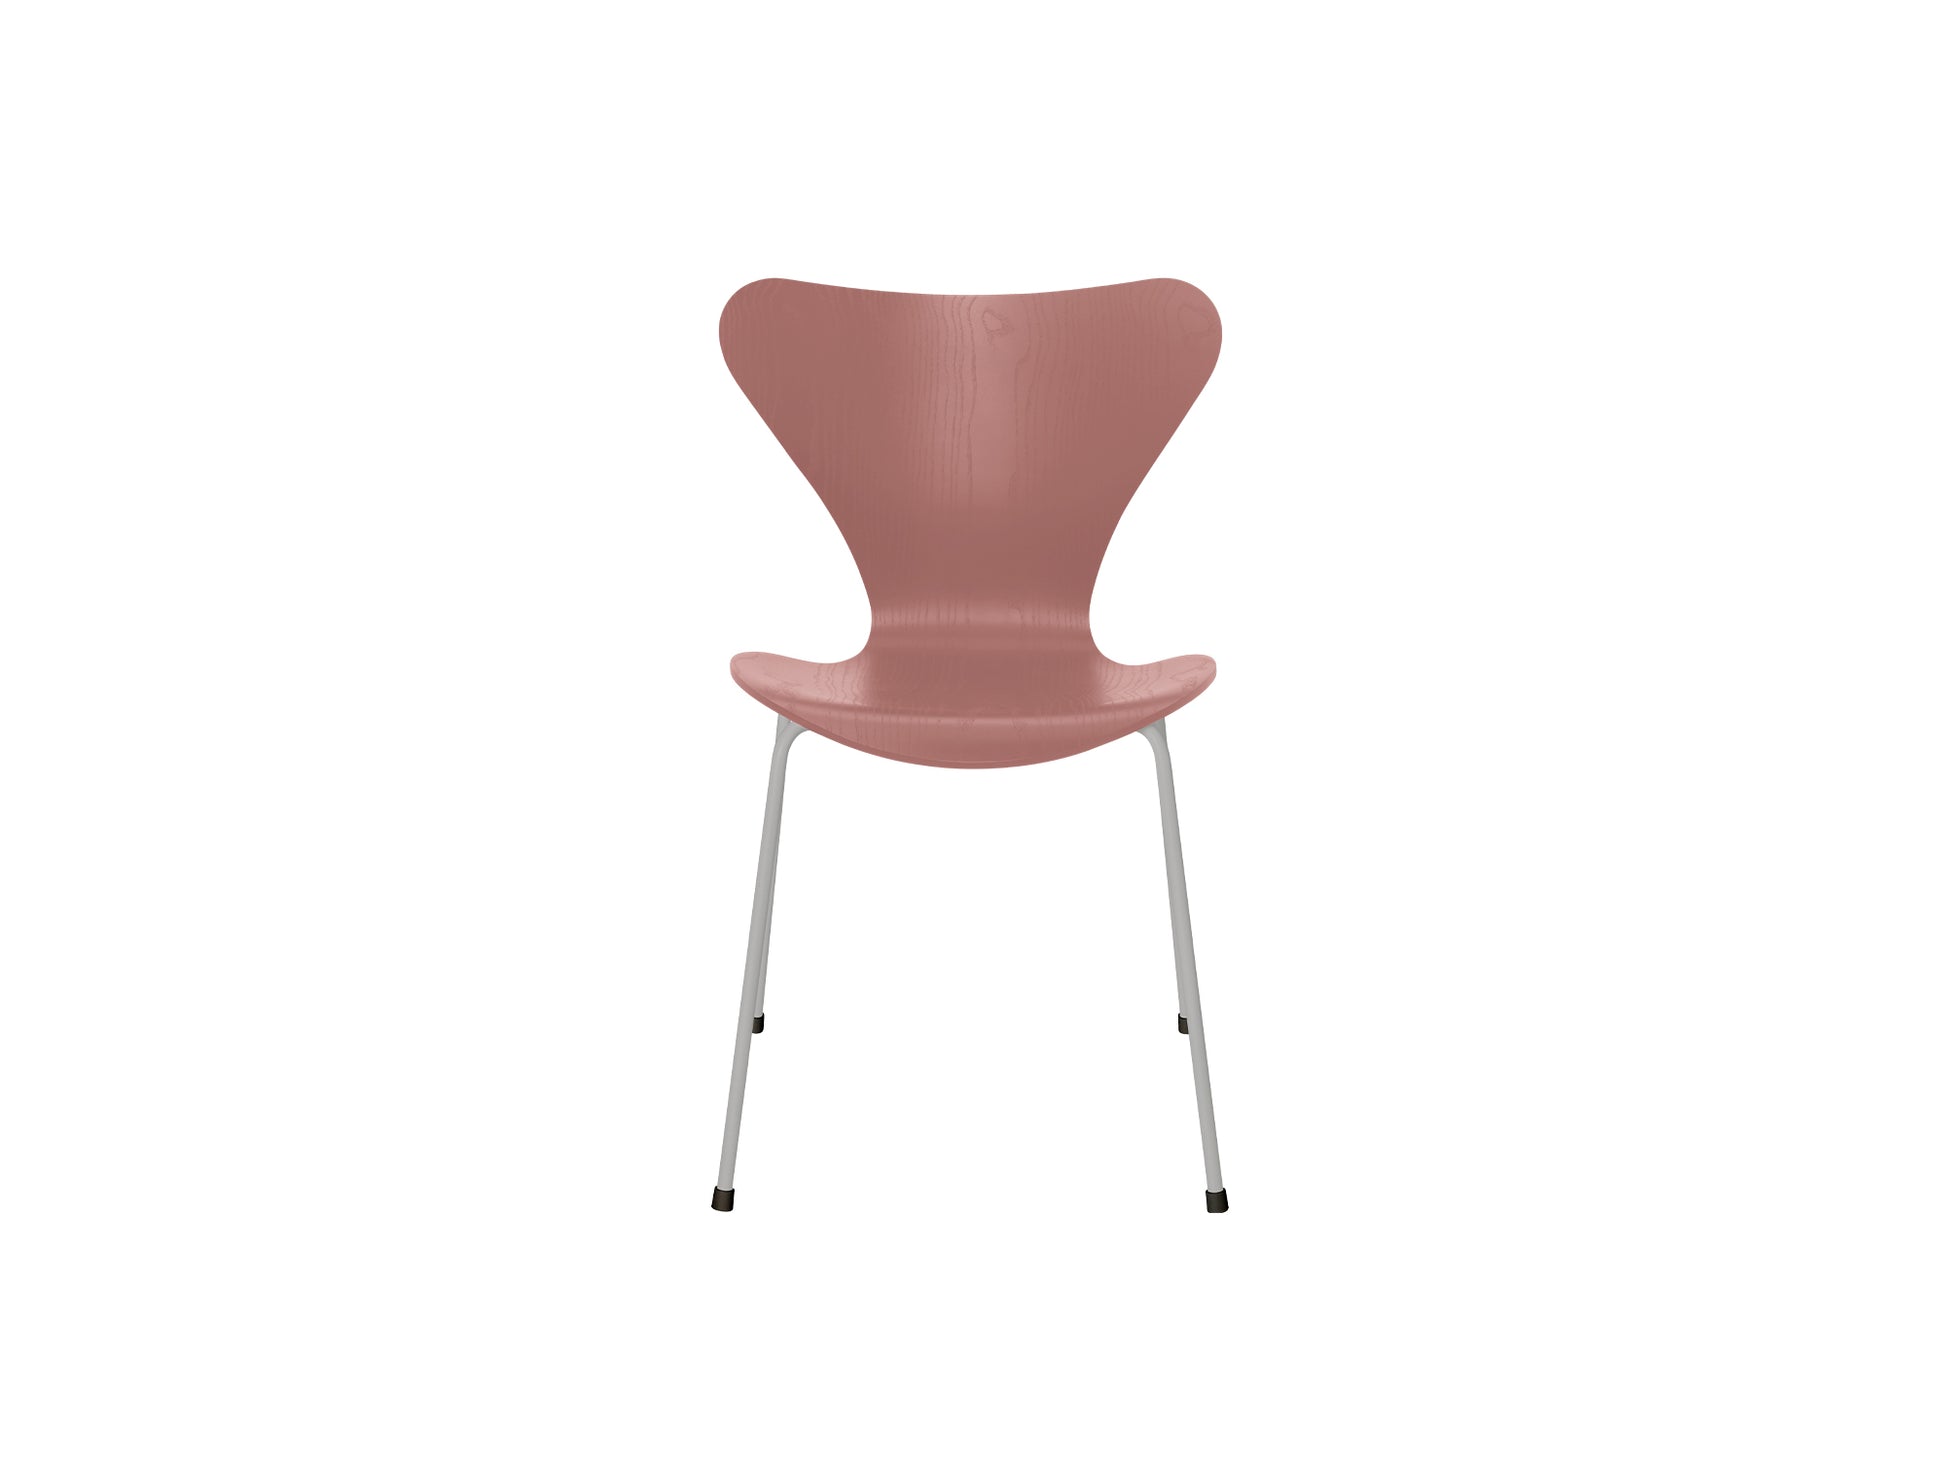 Series 7™ 3107 Dining Chair by Fritz Hansen - Wild Rose Coloured Ash Veneer Shell / Nine Grey Steel